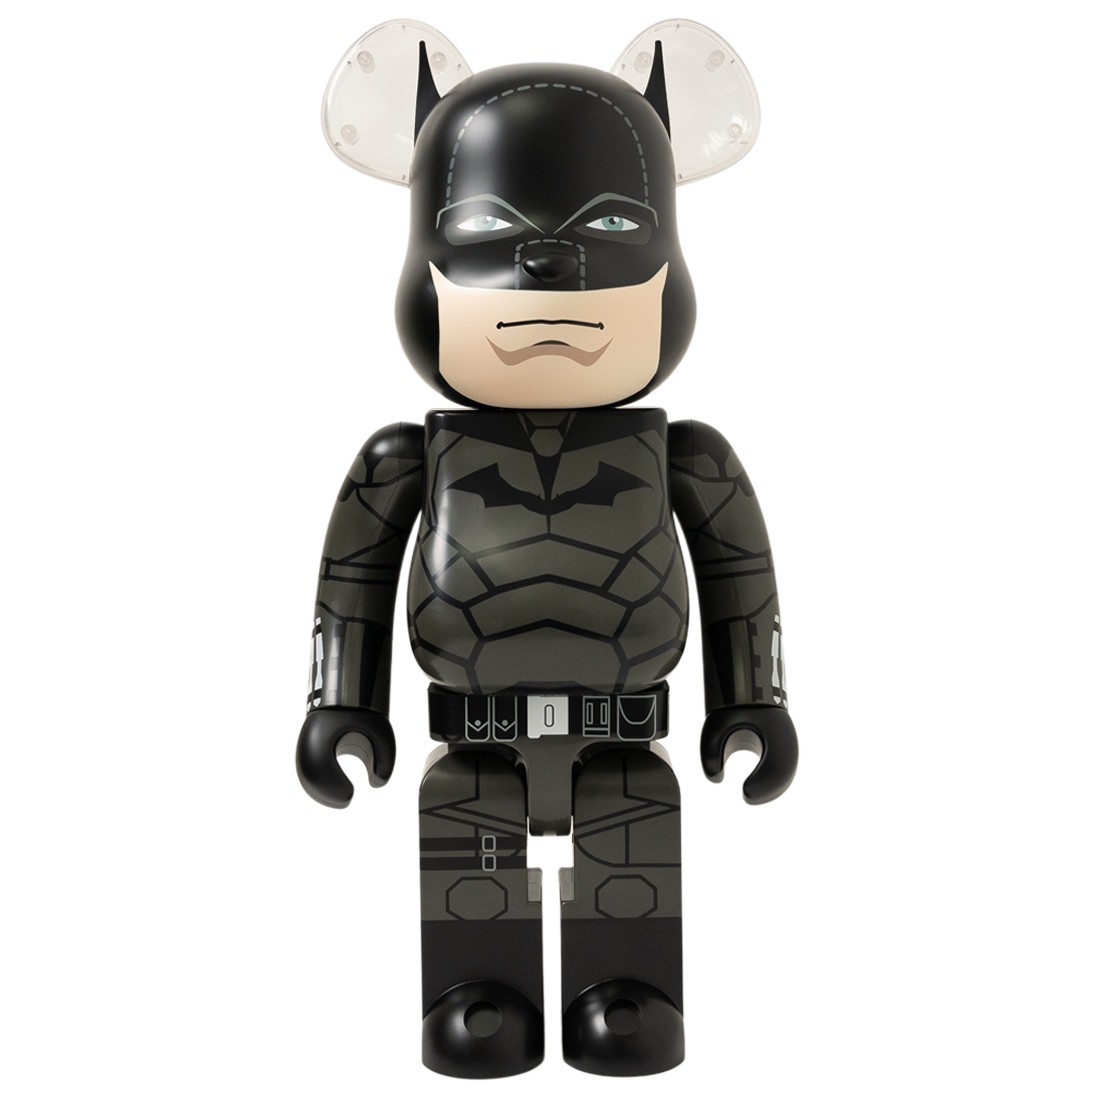 Medicom DC The Batman 1000% Bearbrick Figure (black)